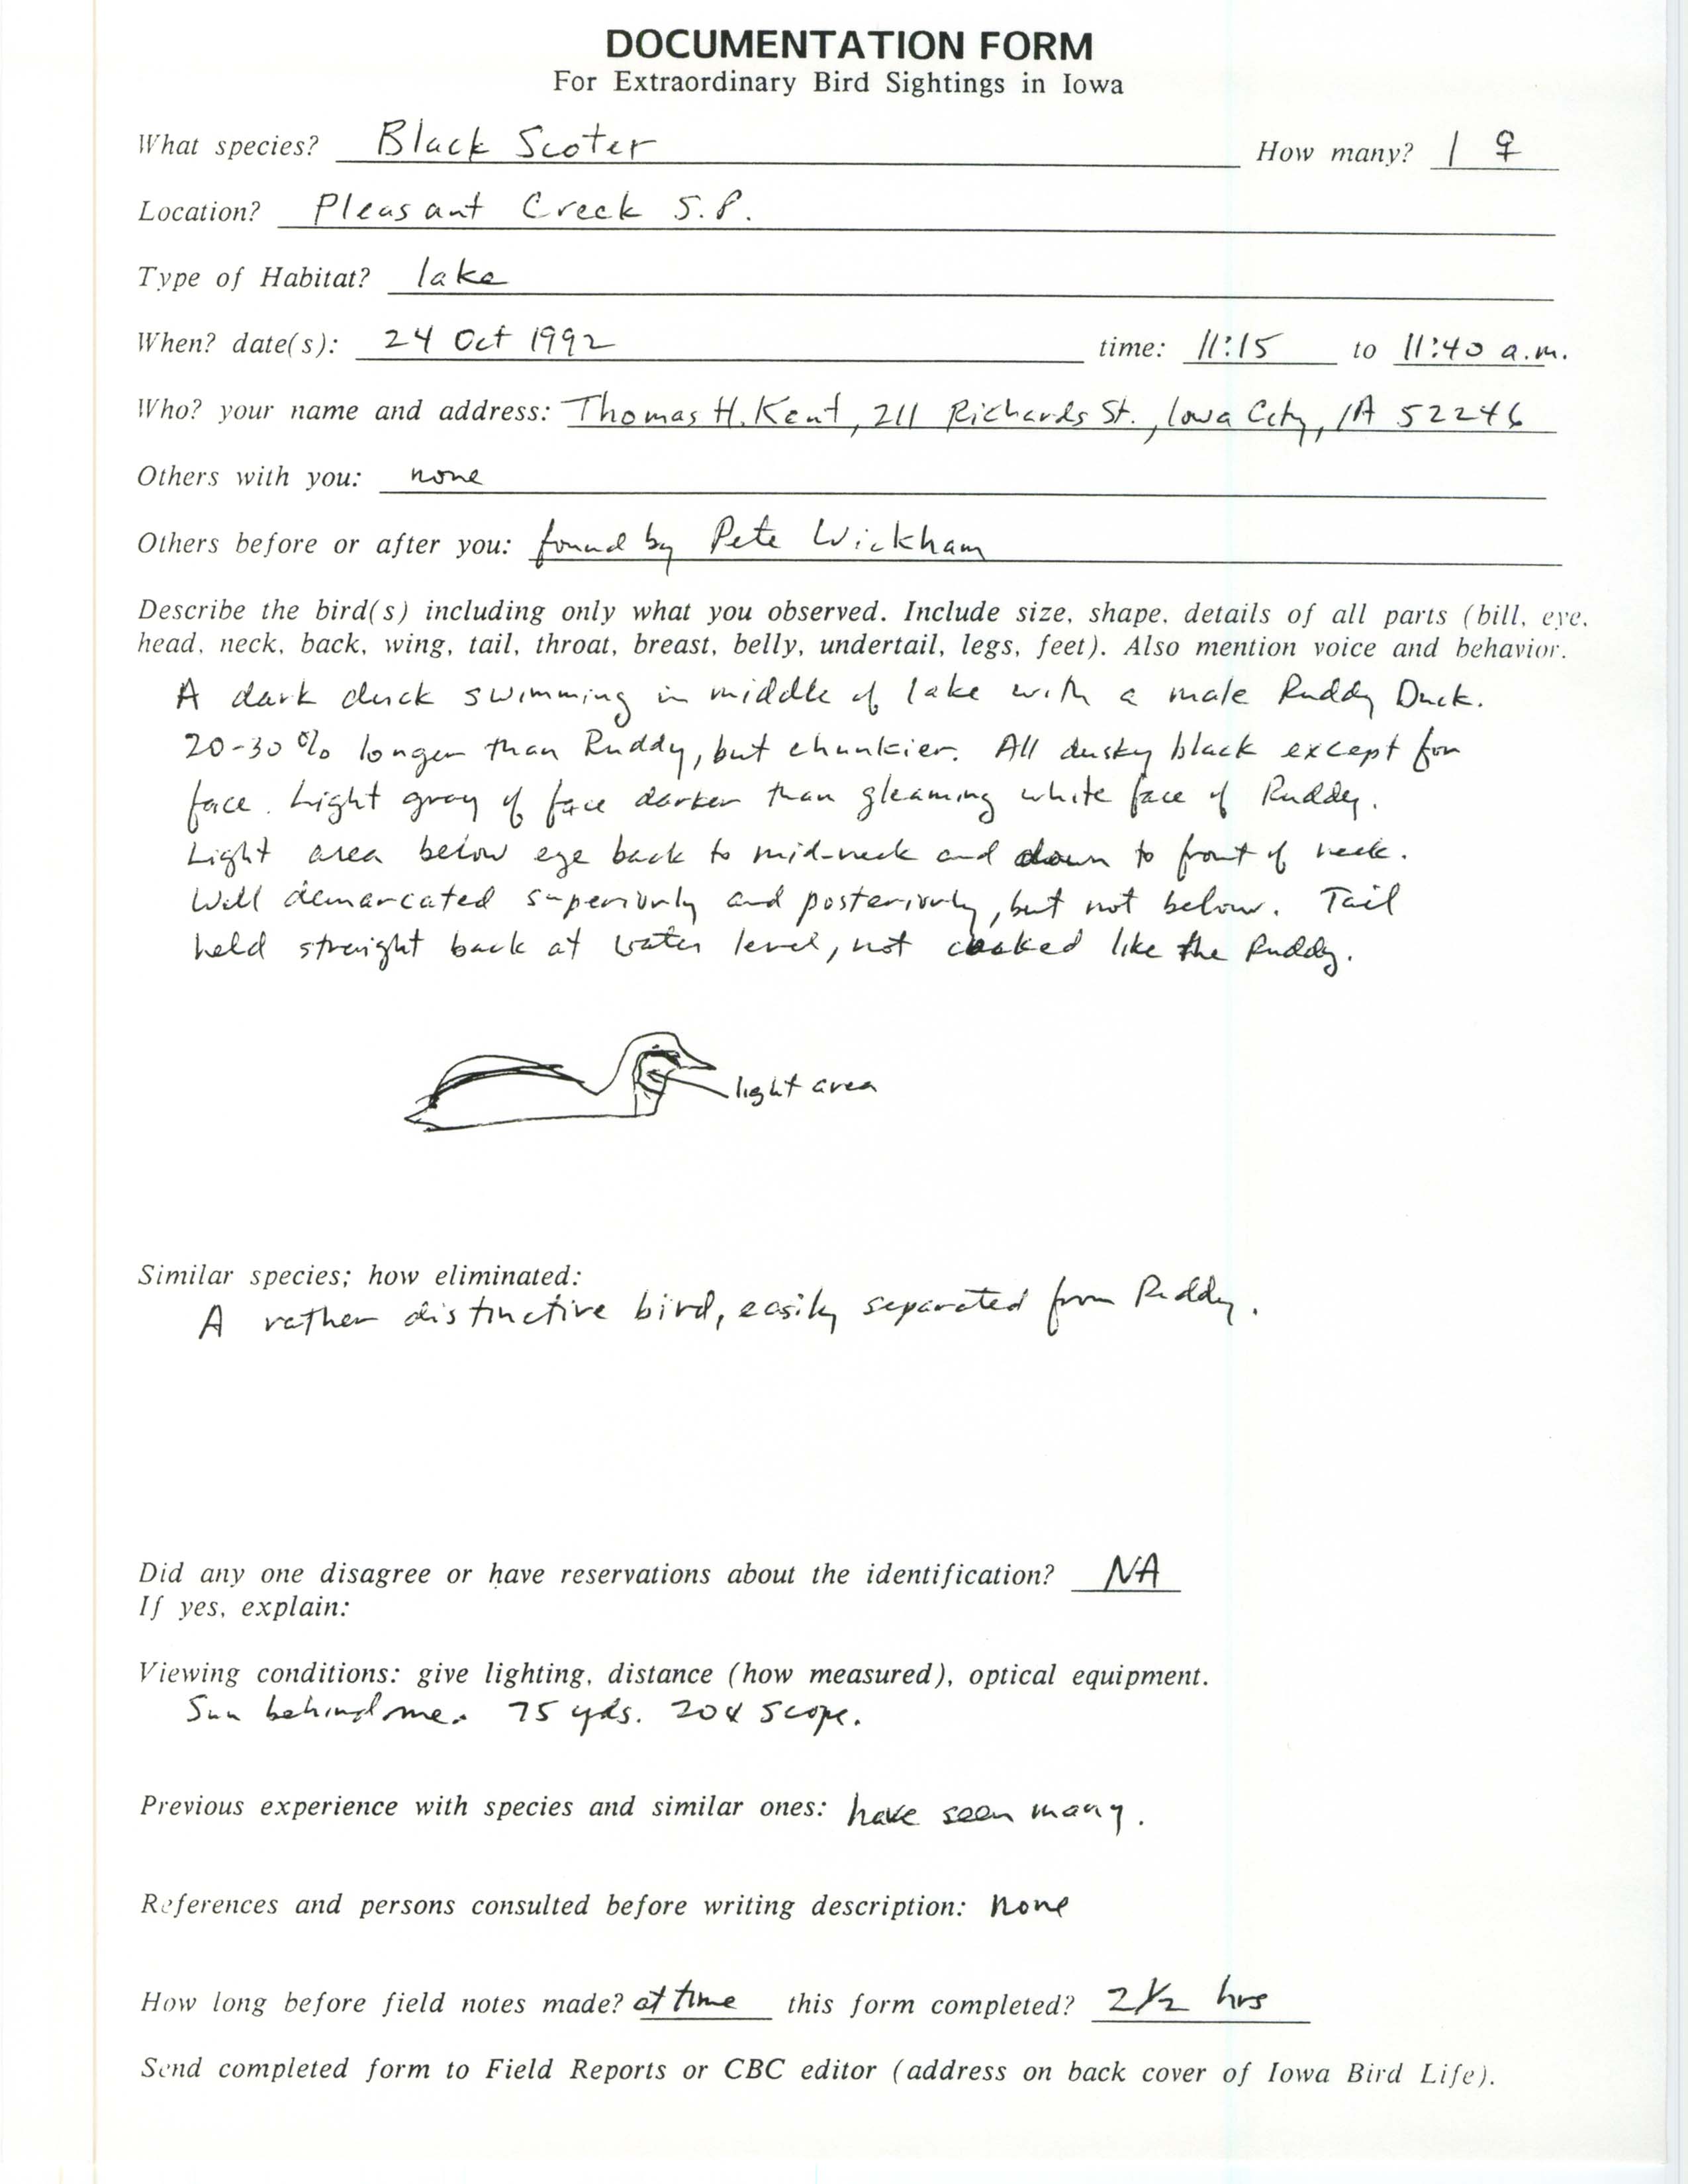 Rare bird documentation form for Black Scoter at Pleasant Creek State Park, 1992